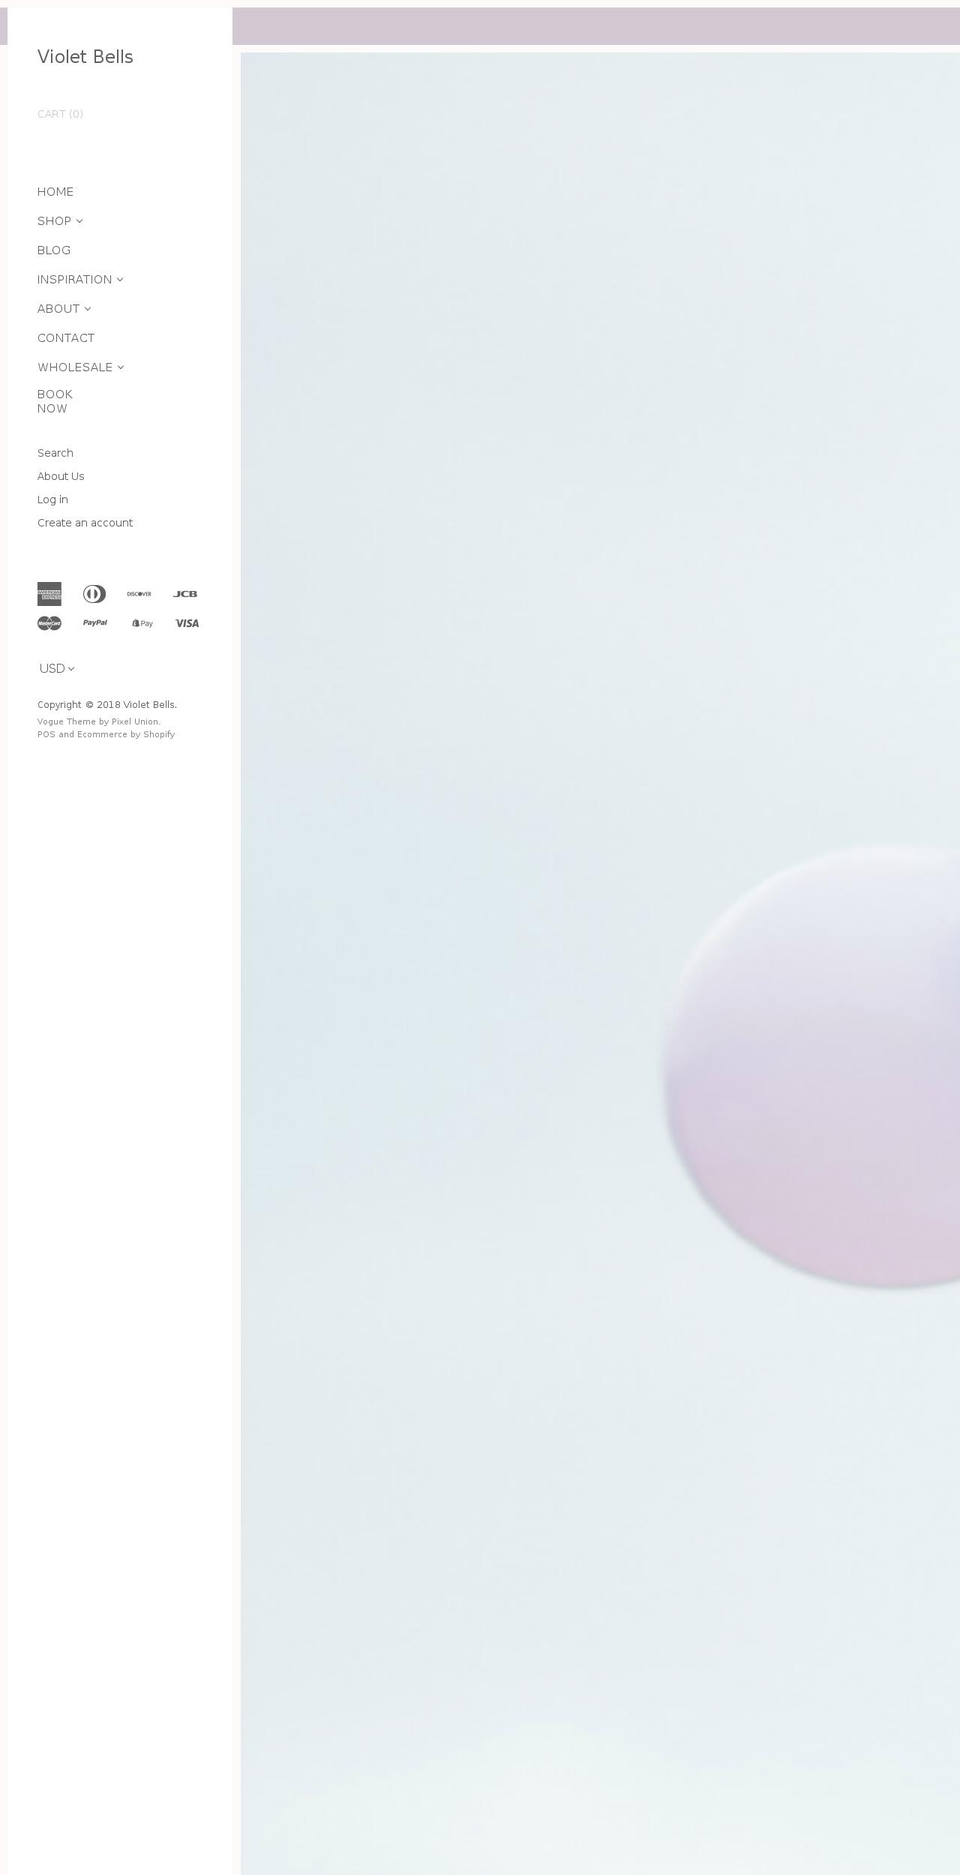 Vogue Shopify theme site example violetbells.com